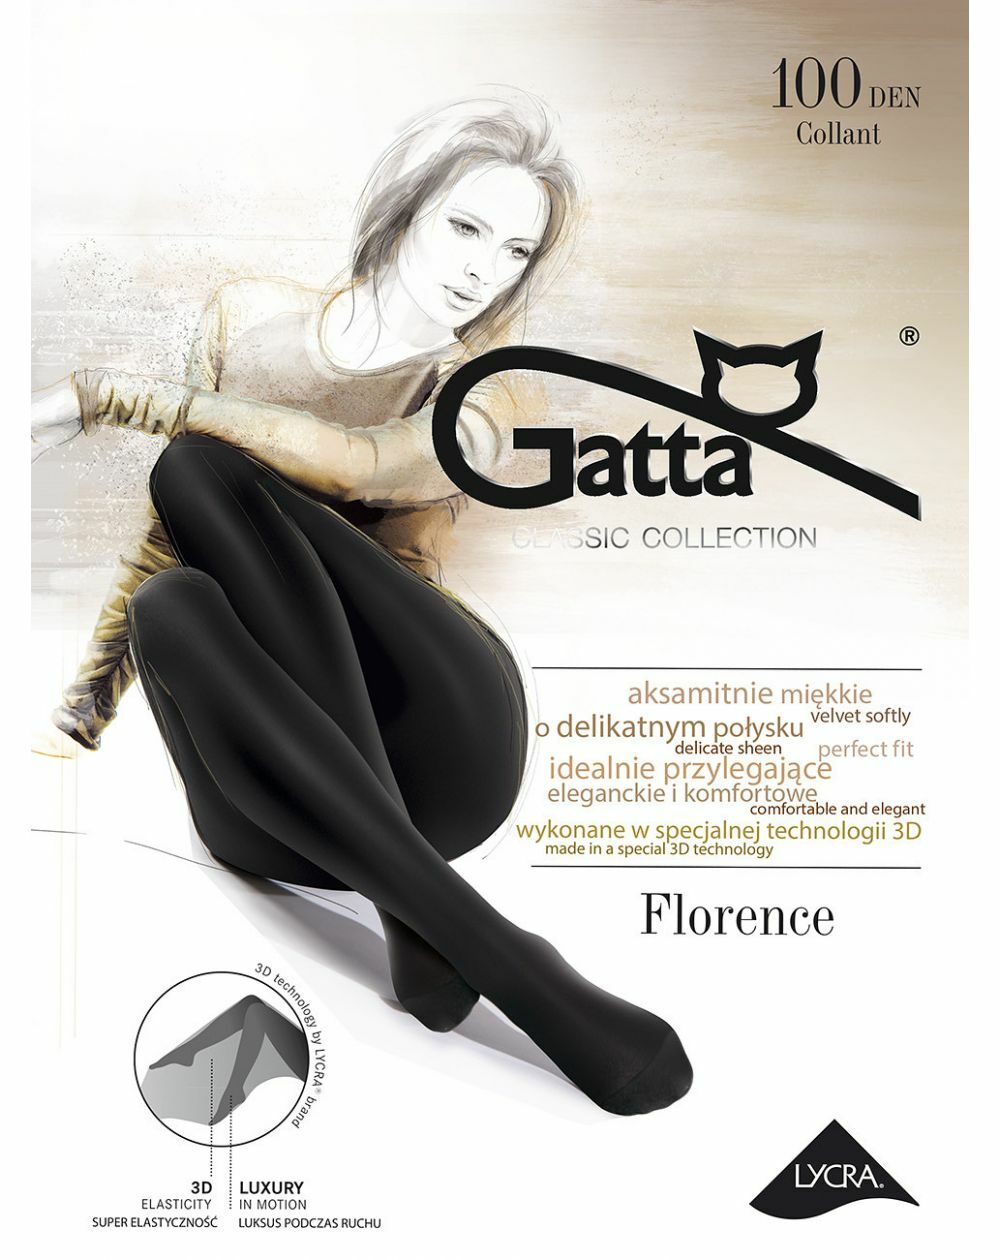 Collant Gatta Florence 100 deniers 2-4